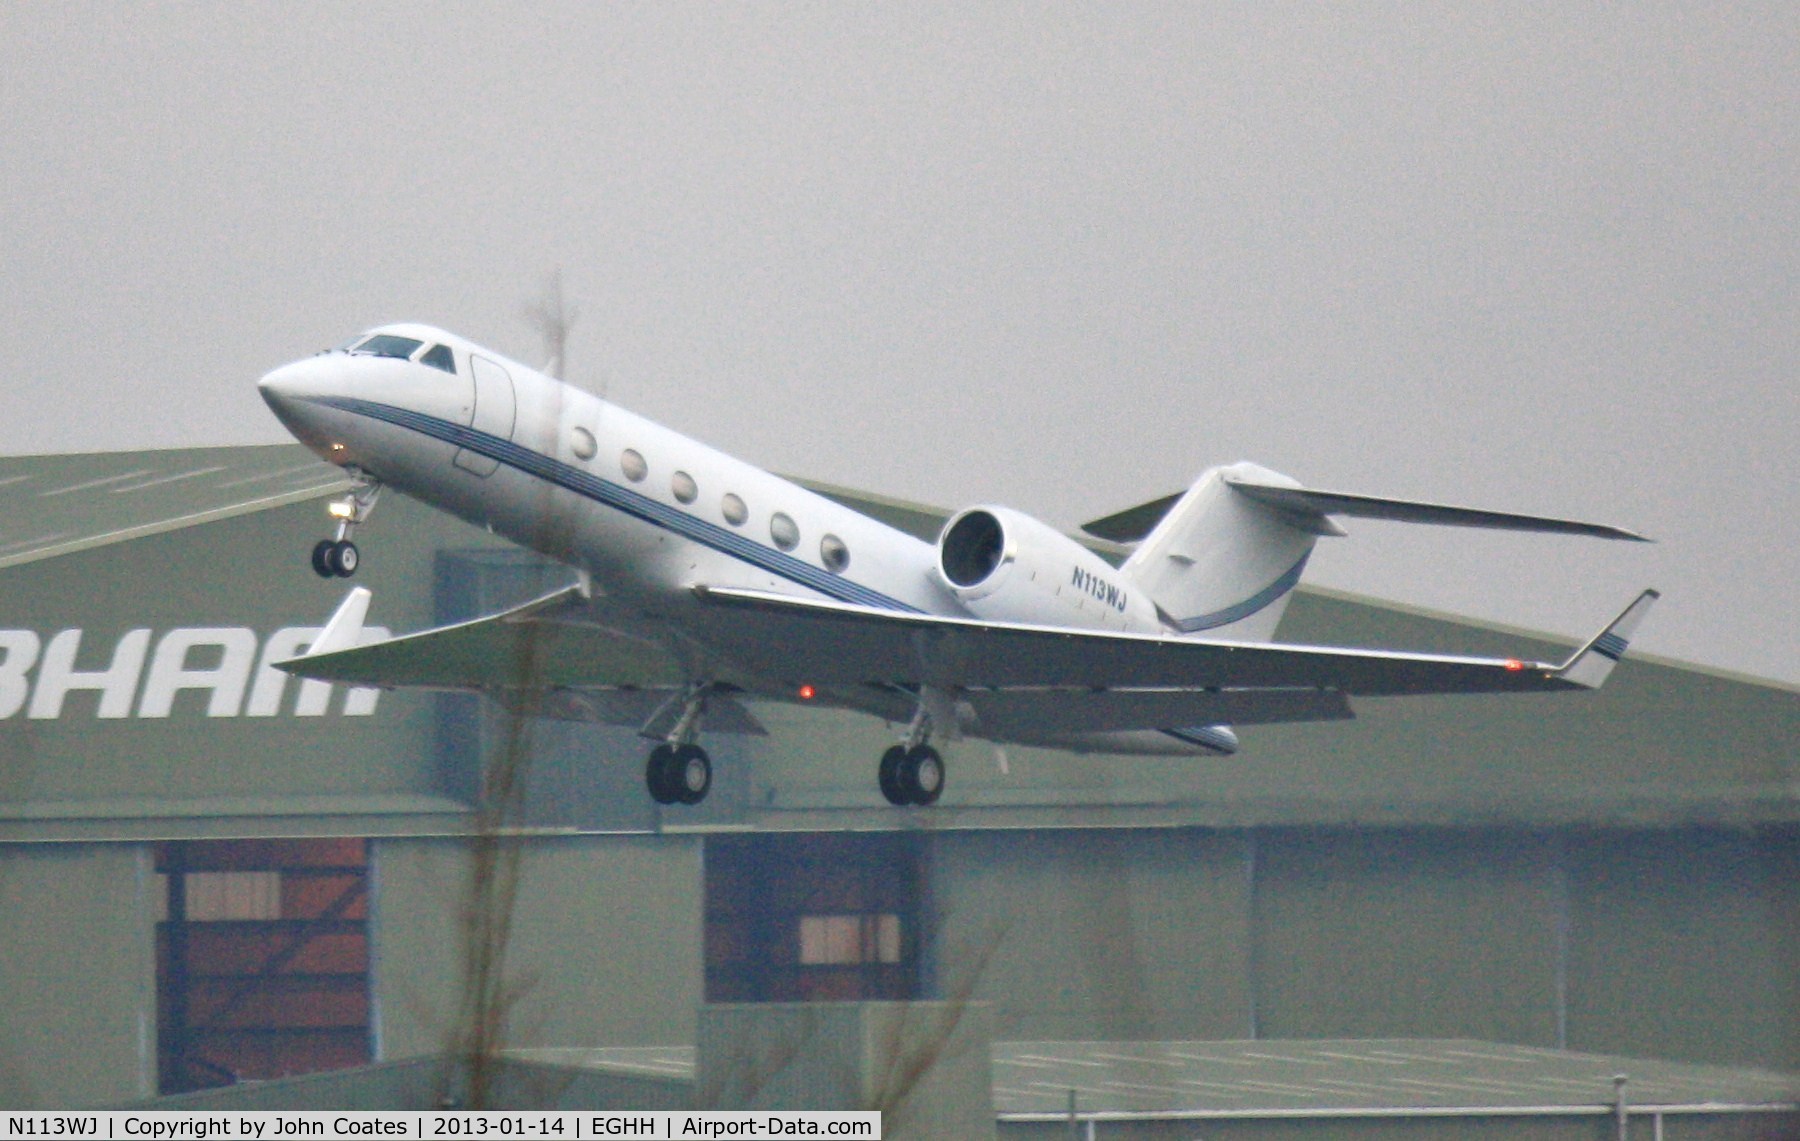 N113WJ, 1991 Gulfstream Aerospace G-IV C/N 1173, Departing after n/s